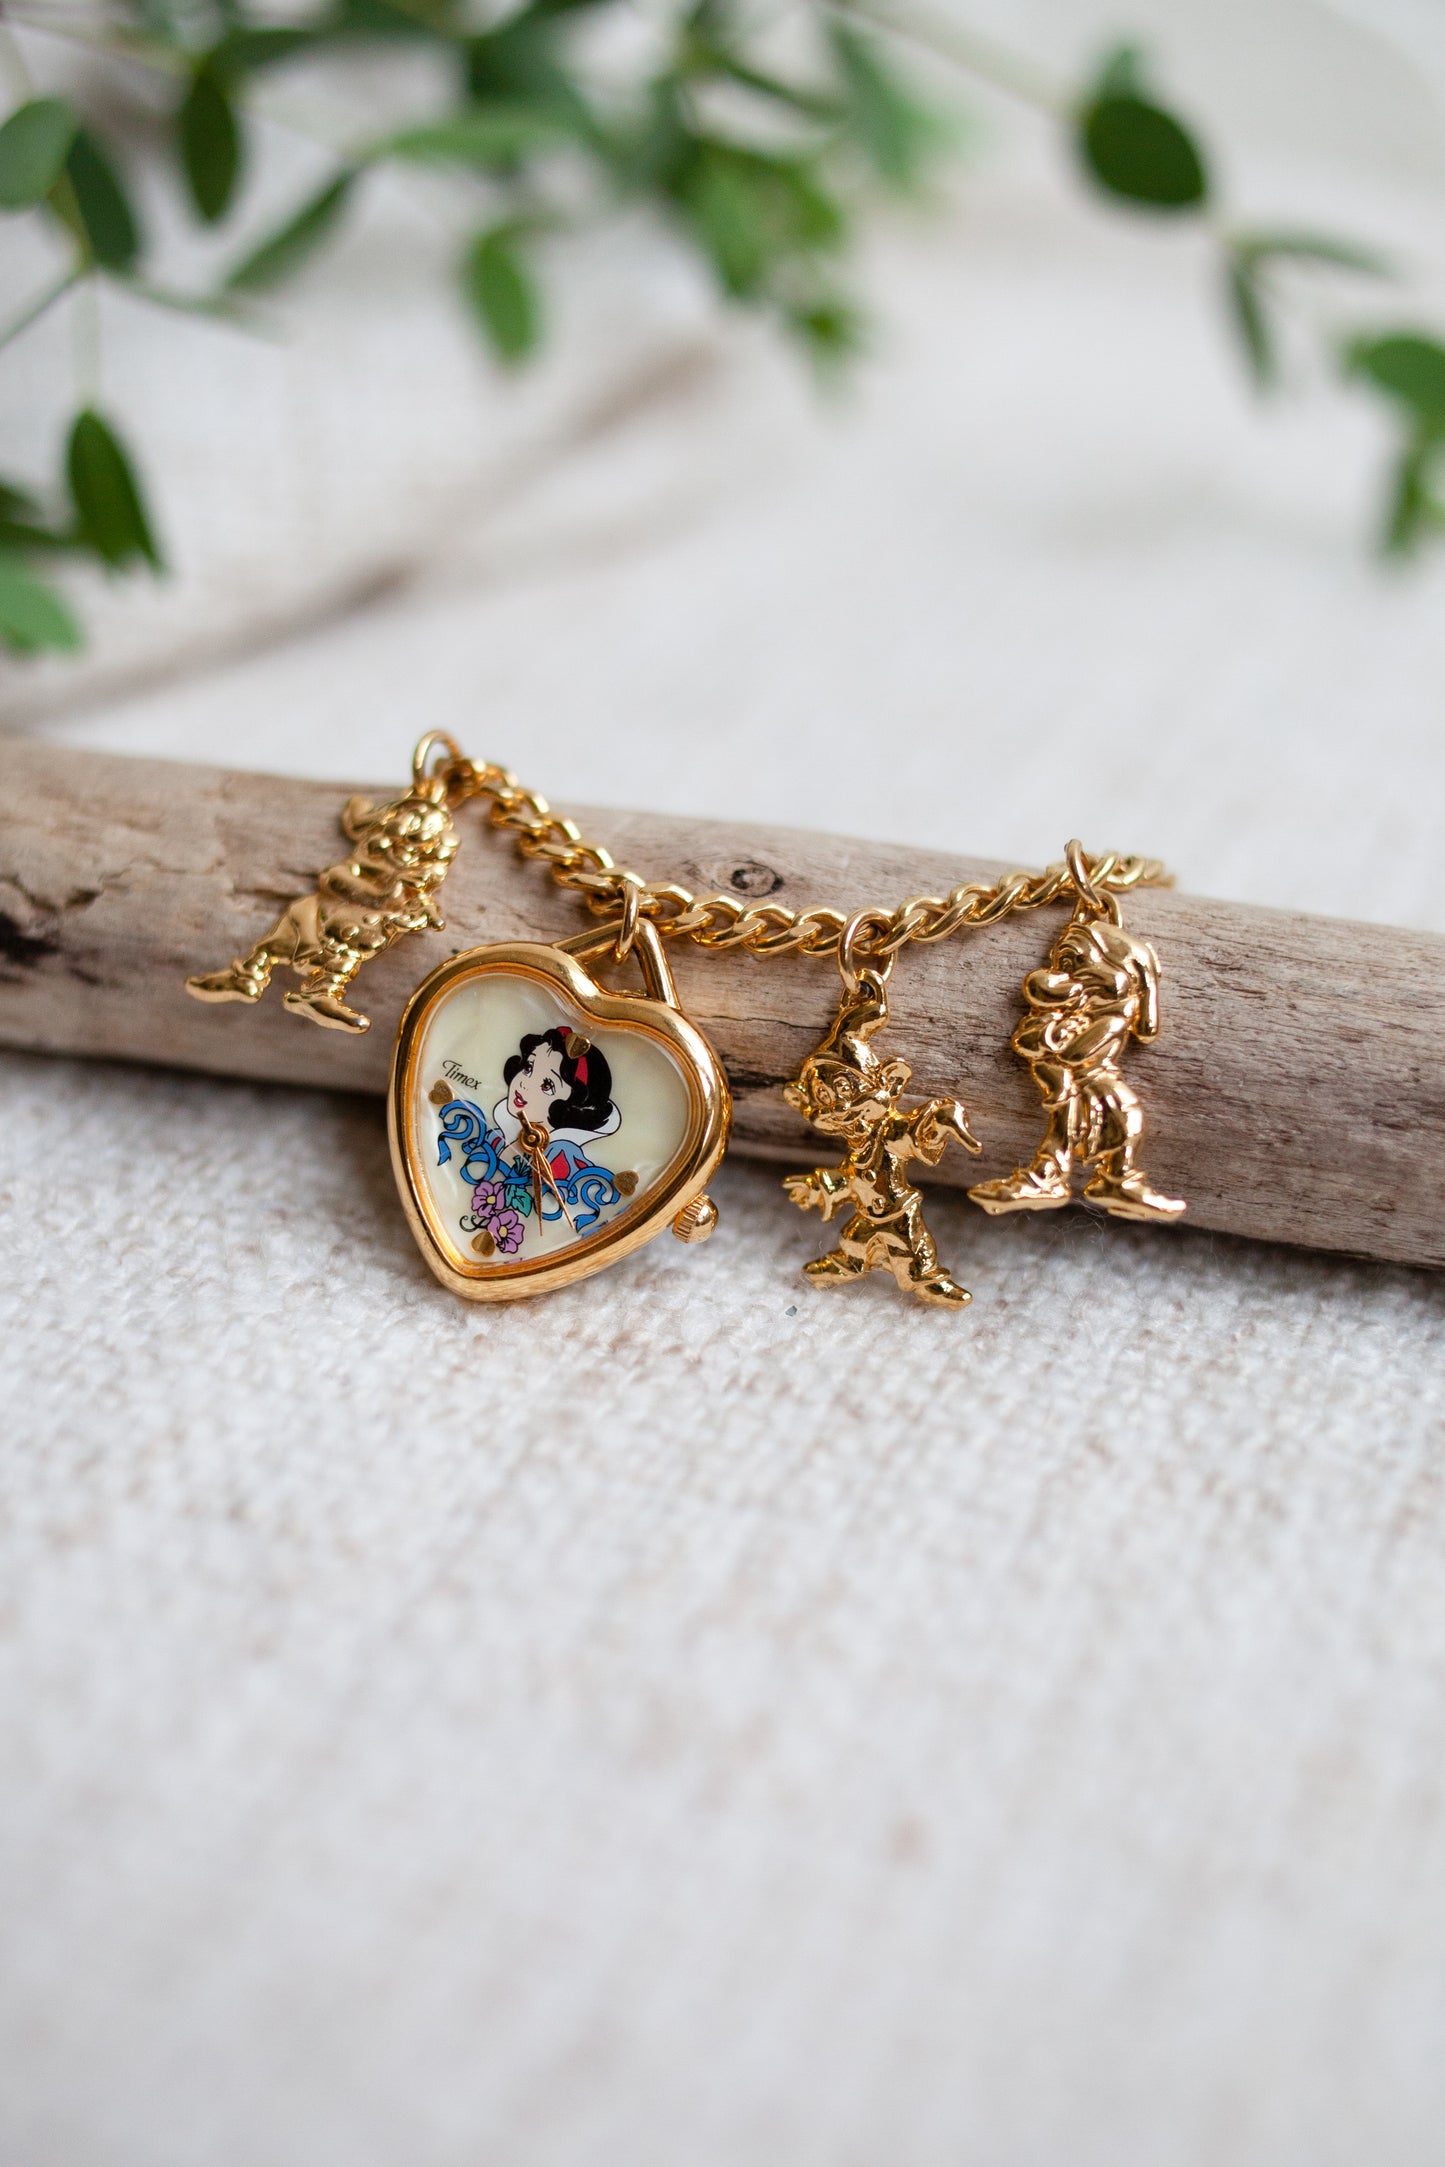 True Vintage: Snow White Charm Bracelet